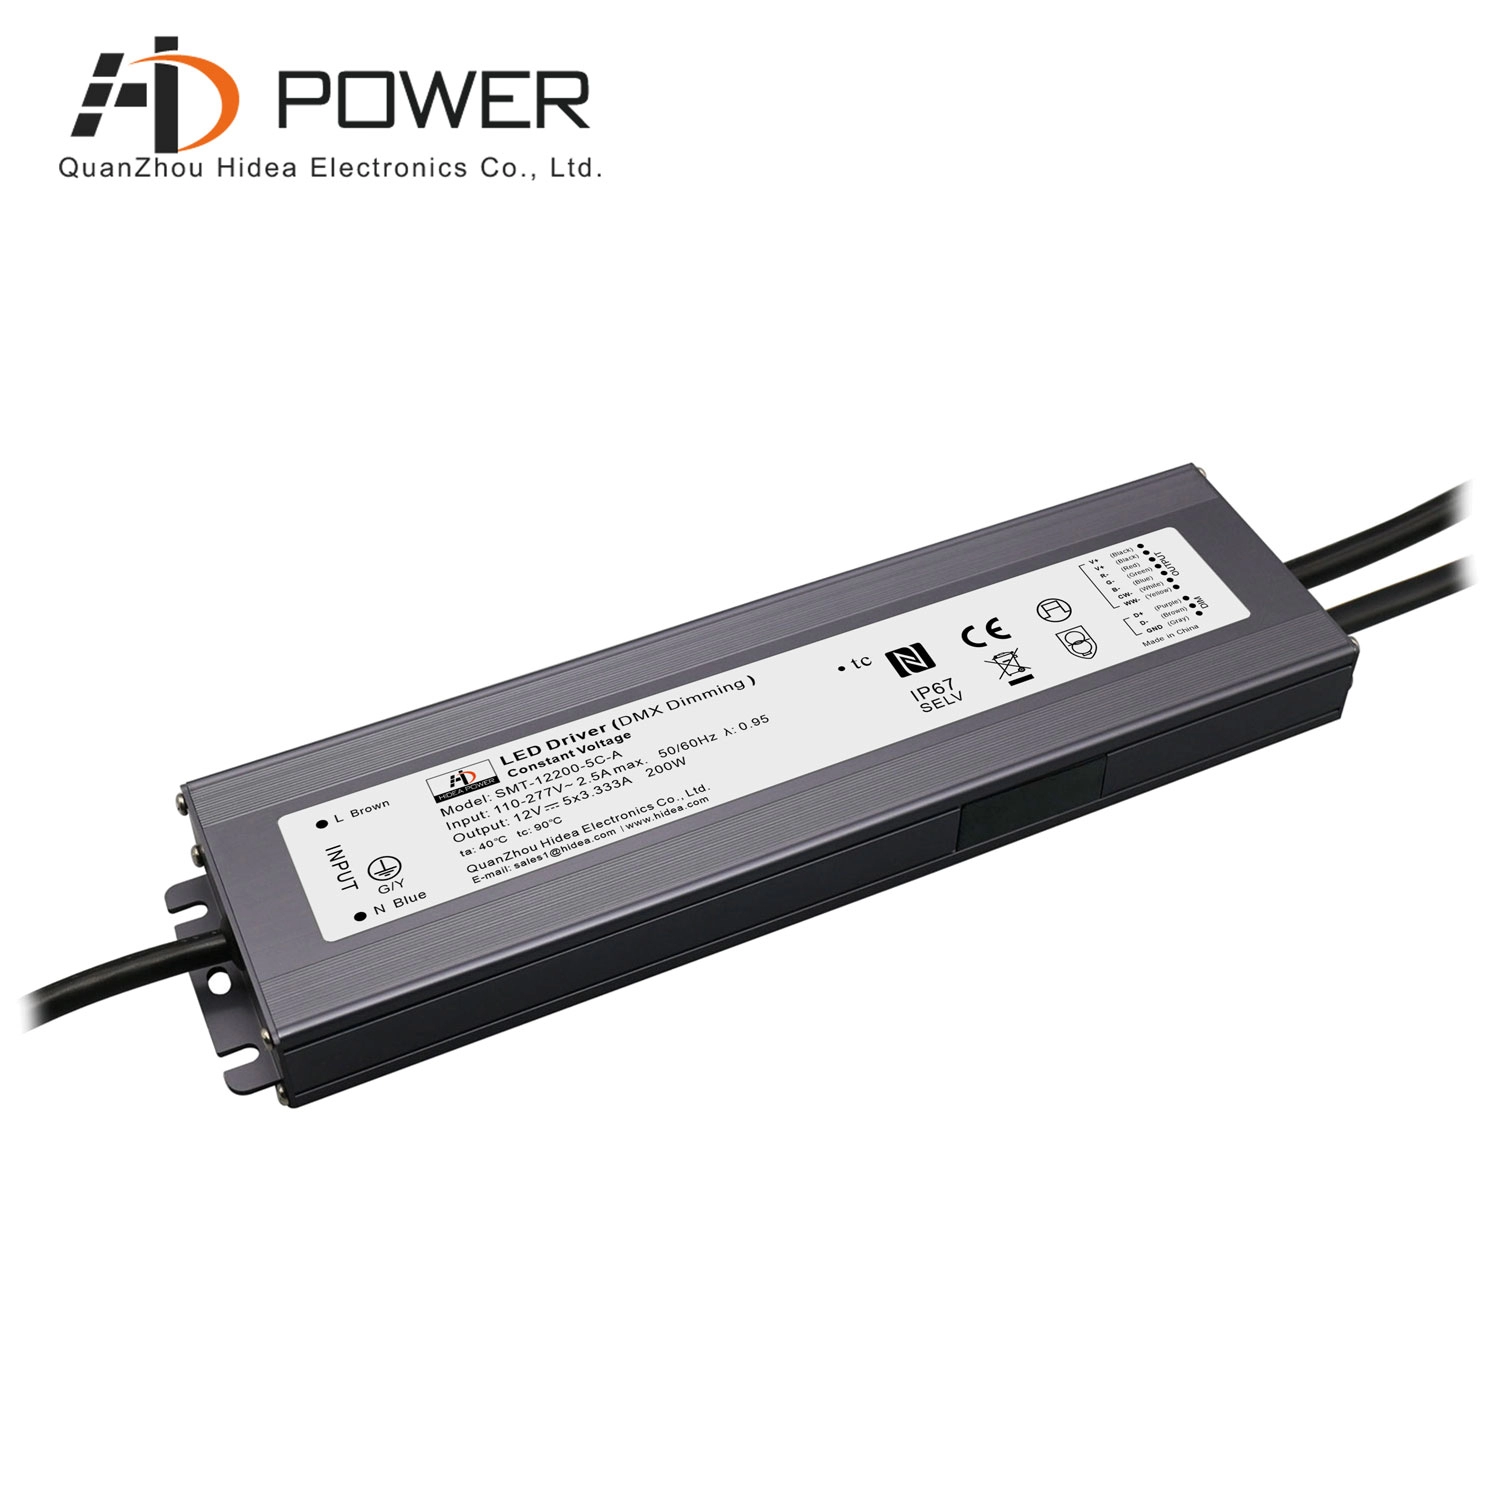 Transformador regulable DMX led de 200w y 12 voltios para RGBCW